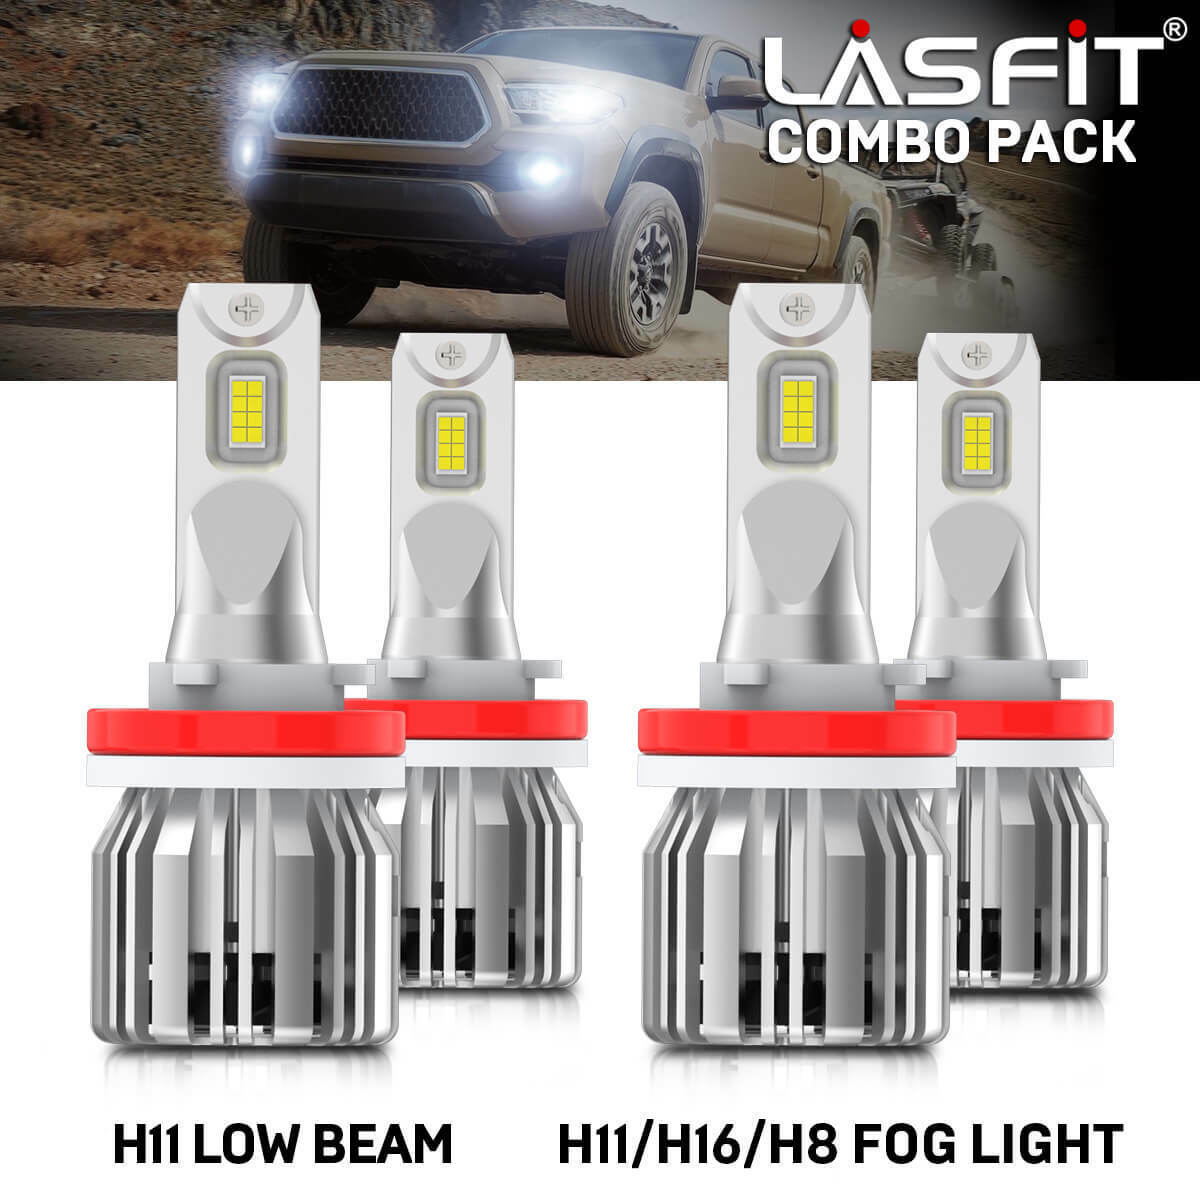 4xLASFIT Combo H11 LED Headlight Fog Light for Toyota Tacoma 16-2021 Camry 07-14